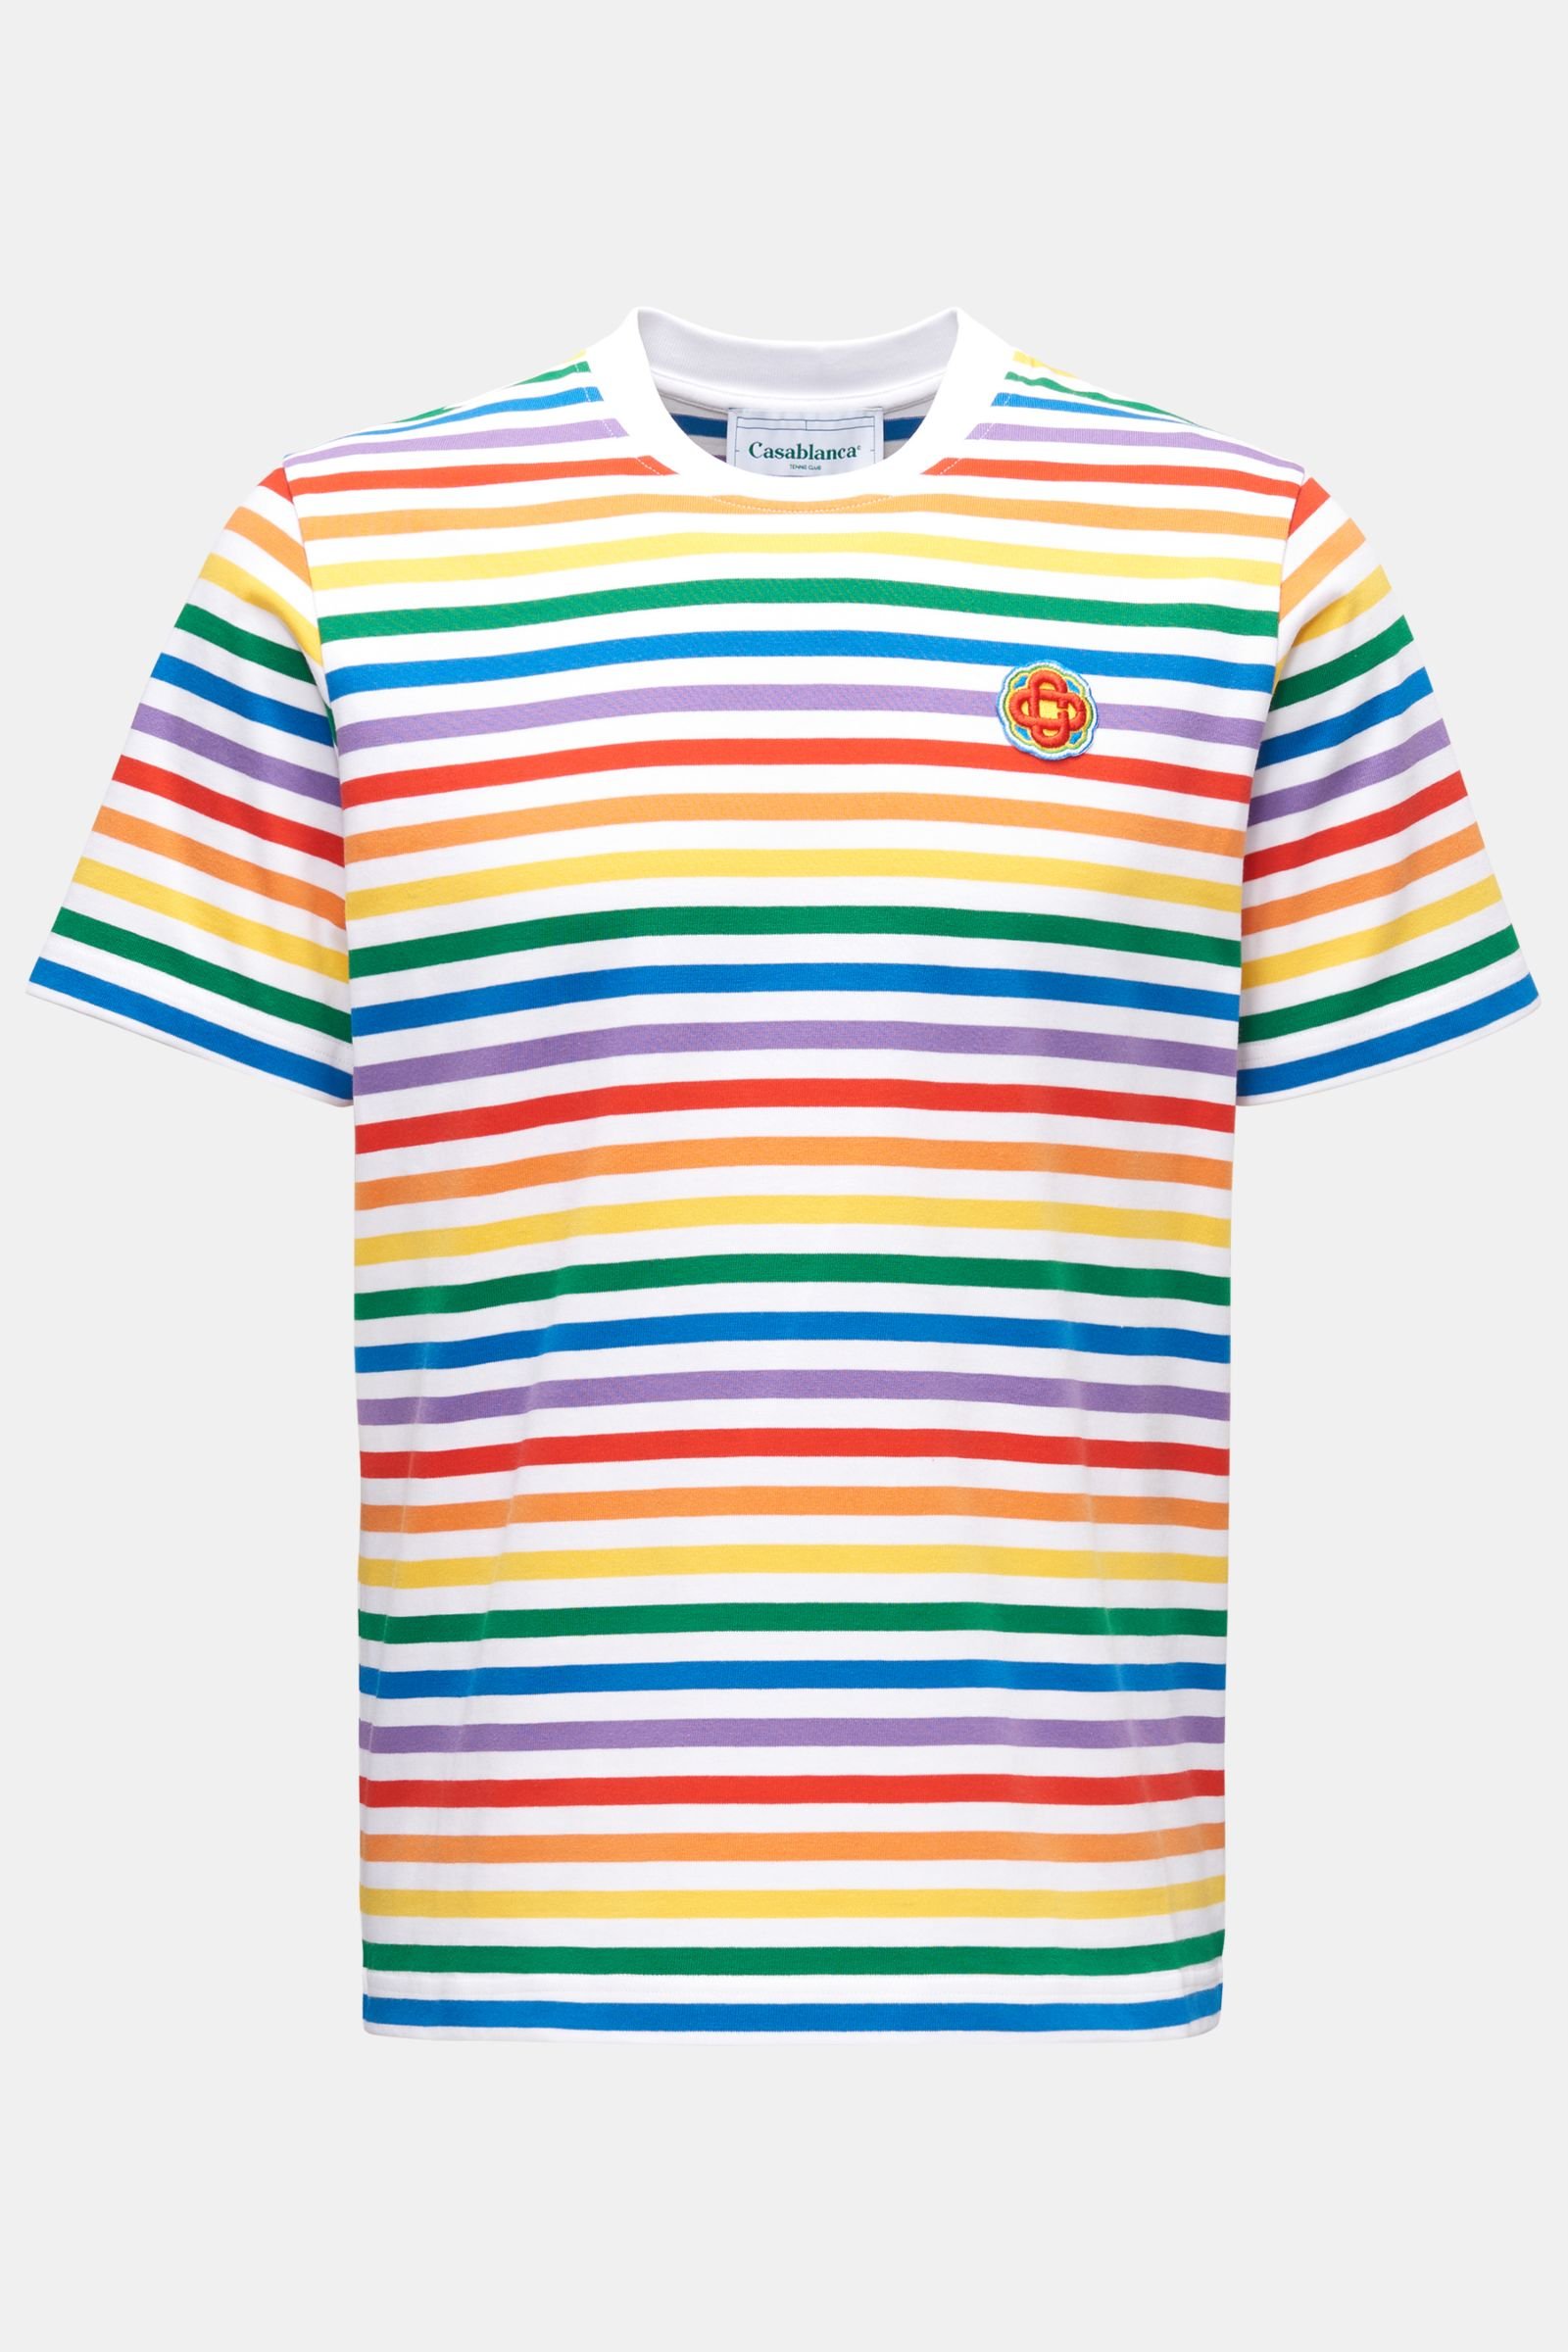 Crew neck T-shirt 'Rainbow Stripe' red/white/blue striped 